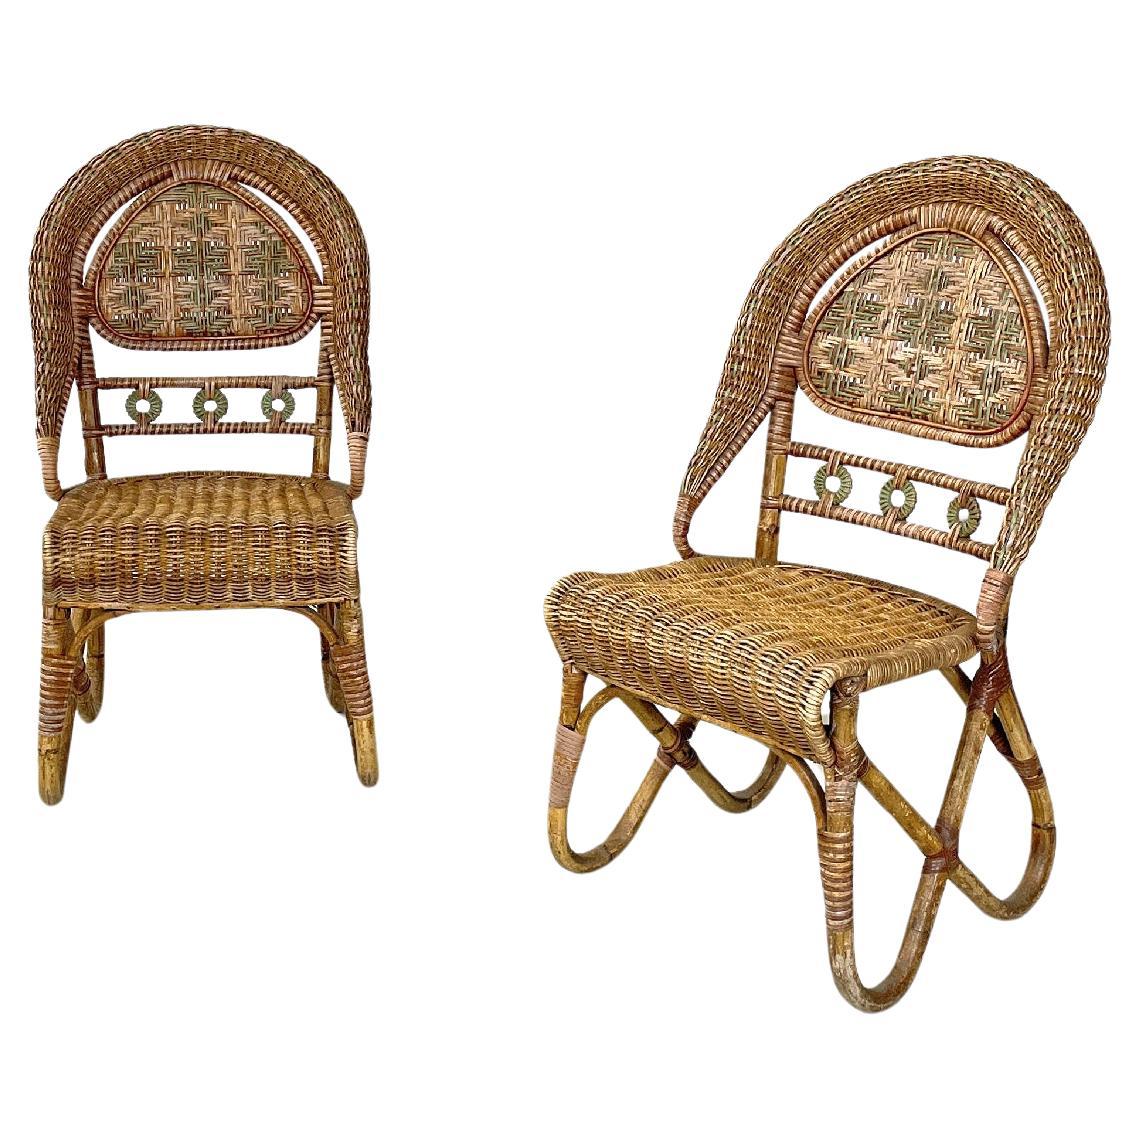 Italian antique rattan chairs by Mongiardino and Bonacina for Bonacina, 1900s For Sale